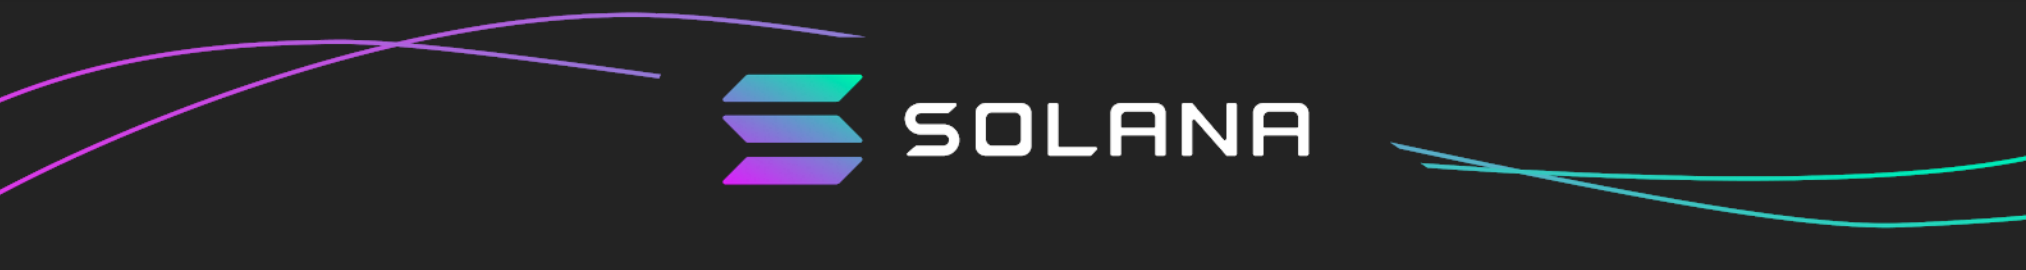 The Solana (SOL) logo in a horizontal bar.